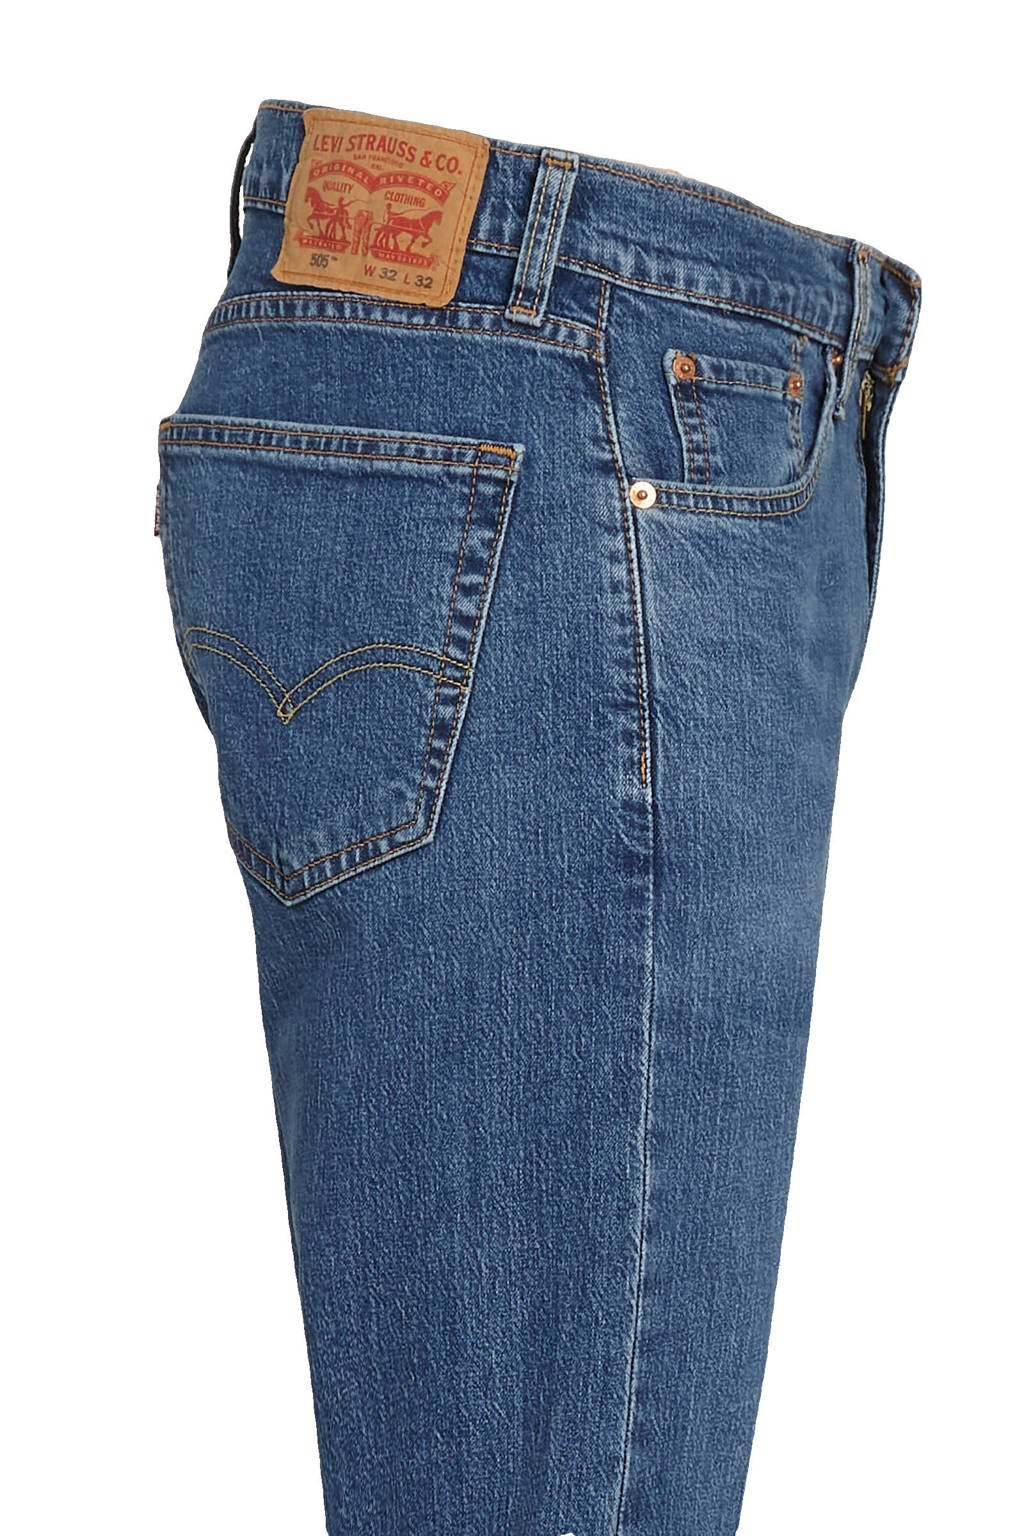 Levi's 505 regular fit jeans fremont drop shot | wehkamp